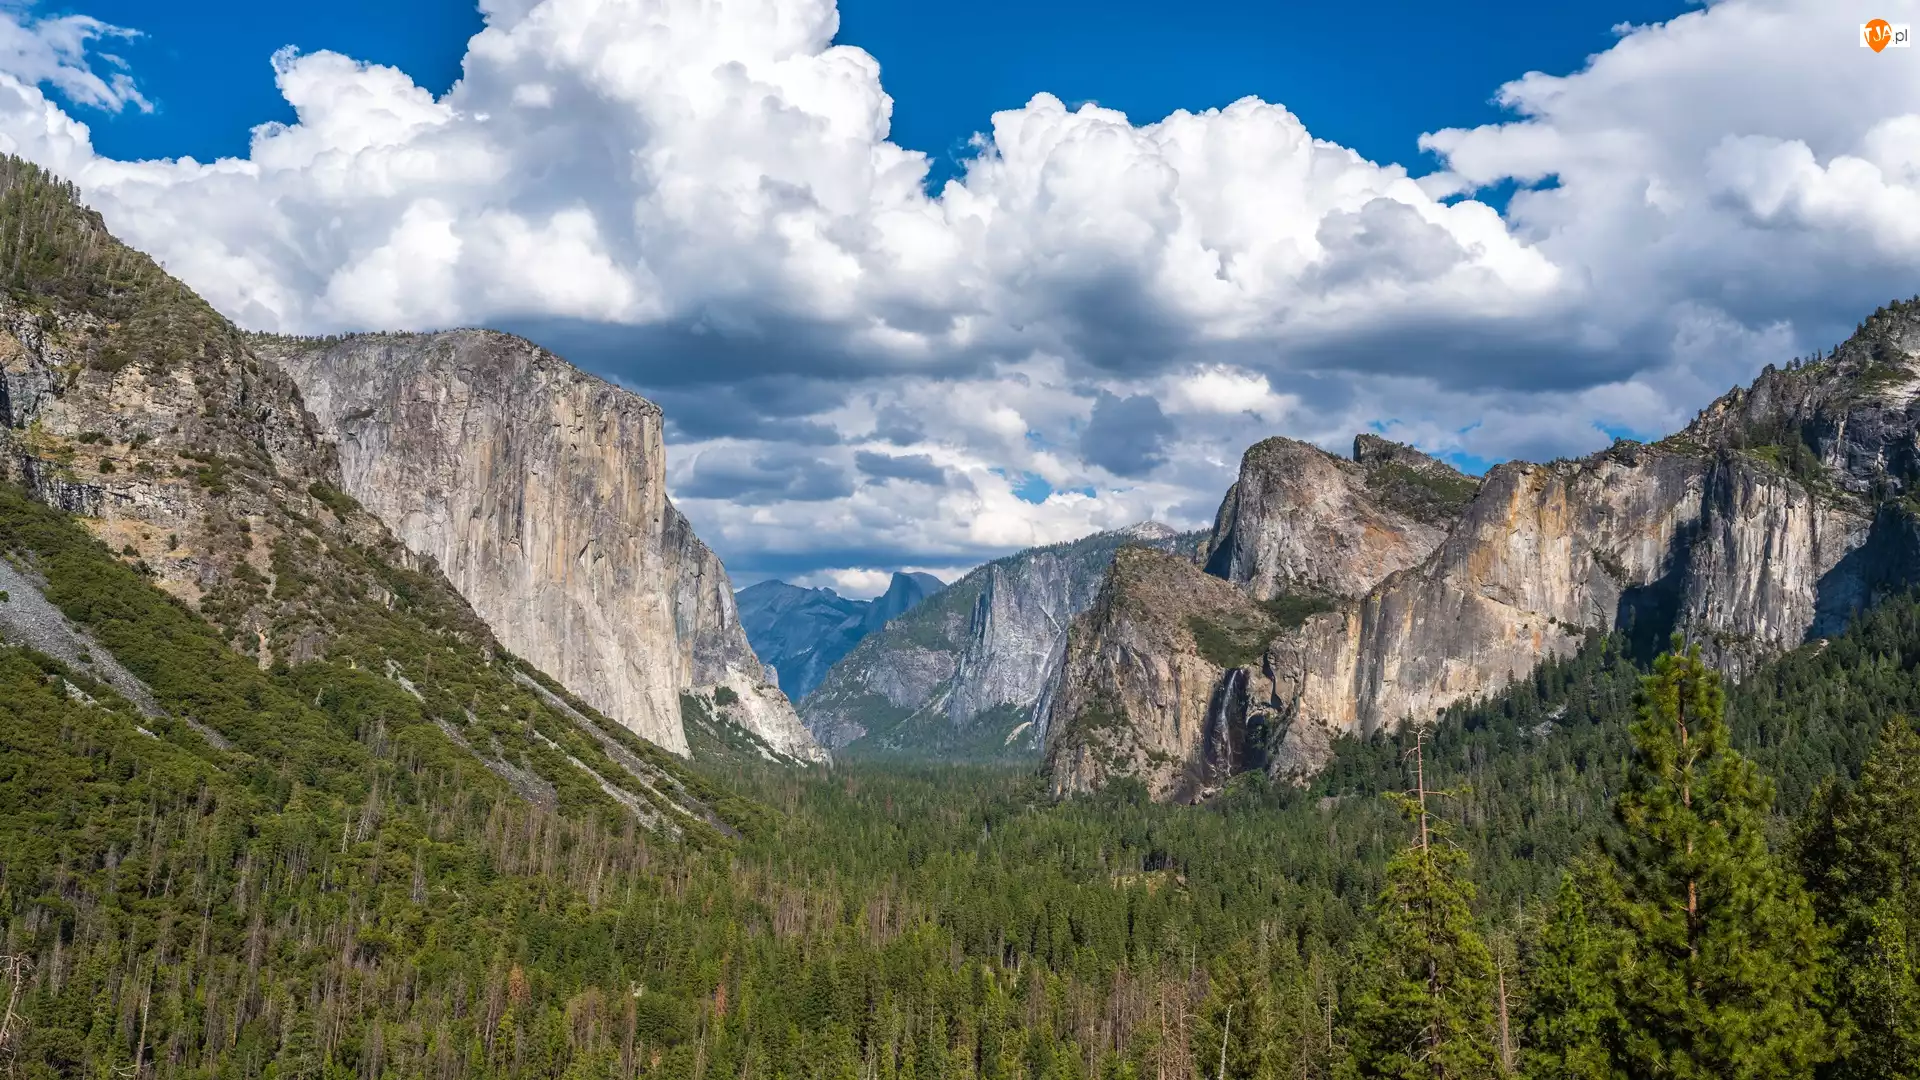 Stany Zjednoczone, Yosemite Valley, Stan Kalifornia, Lasy, Chmury, Park Narodowy Yosemite, Góry, Dolina, Drzewa